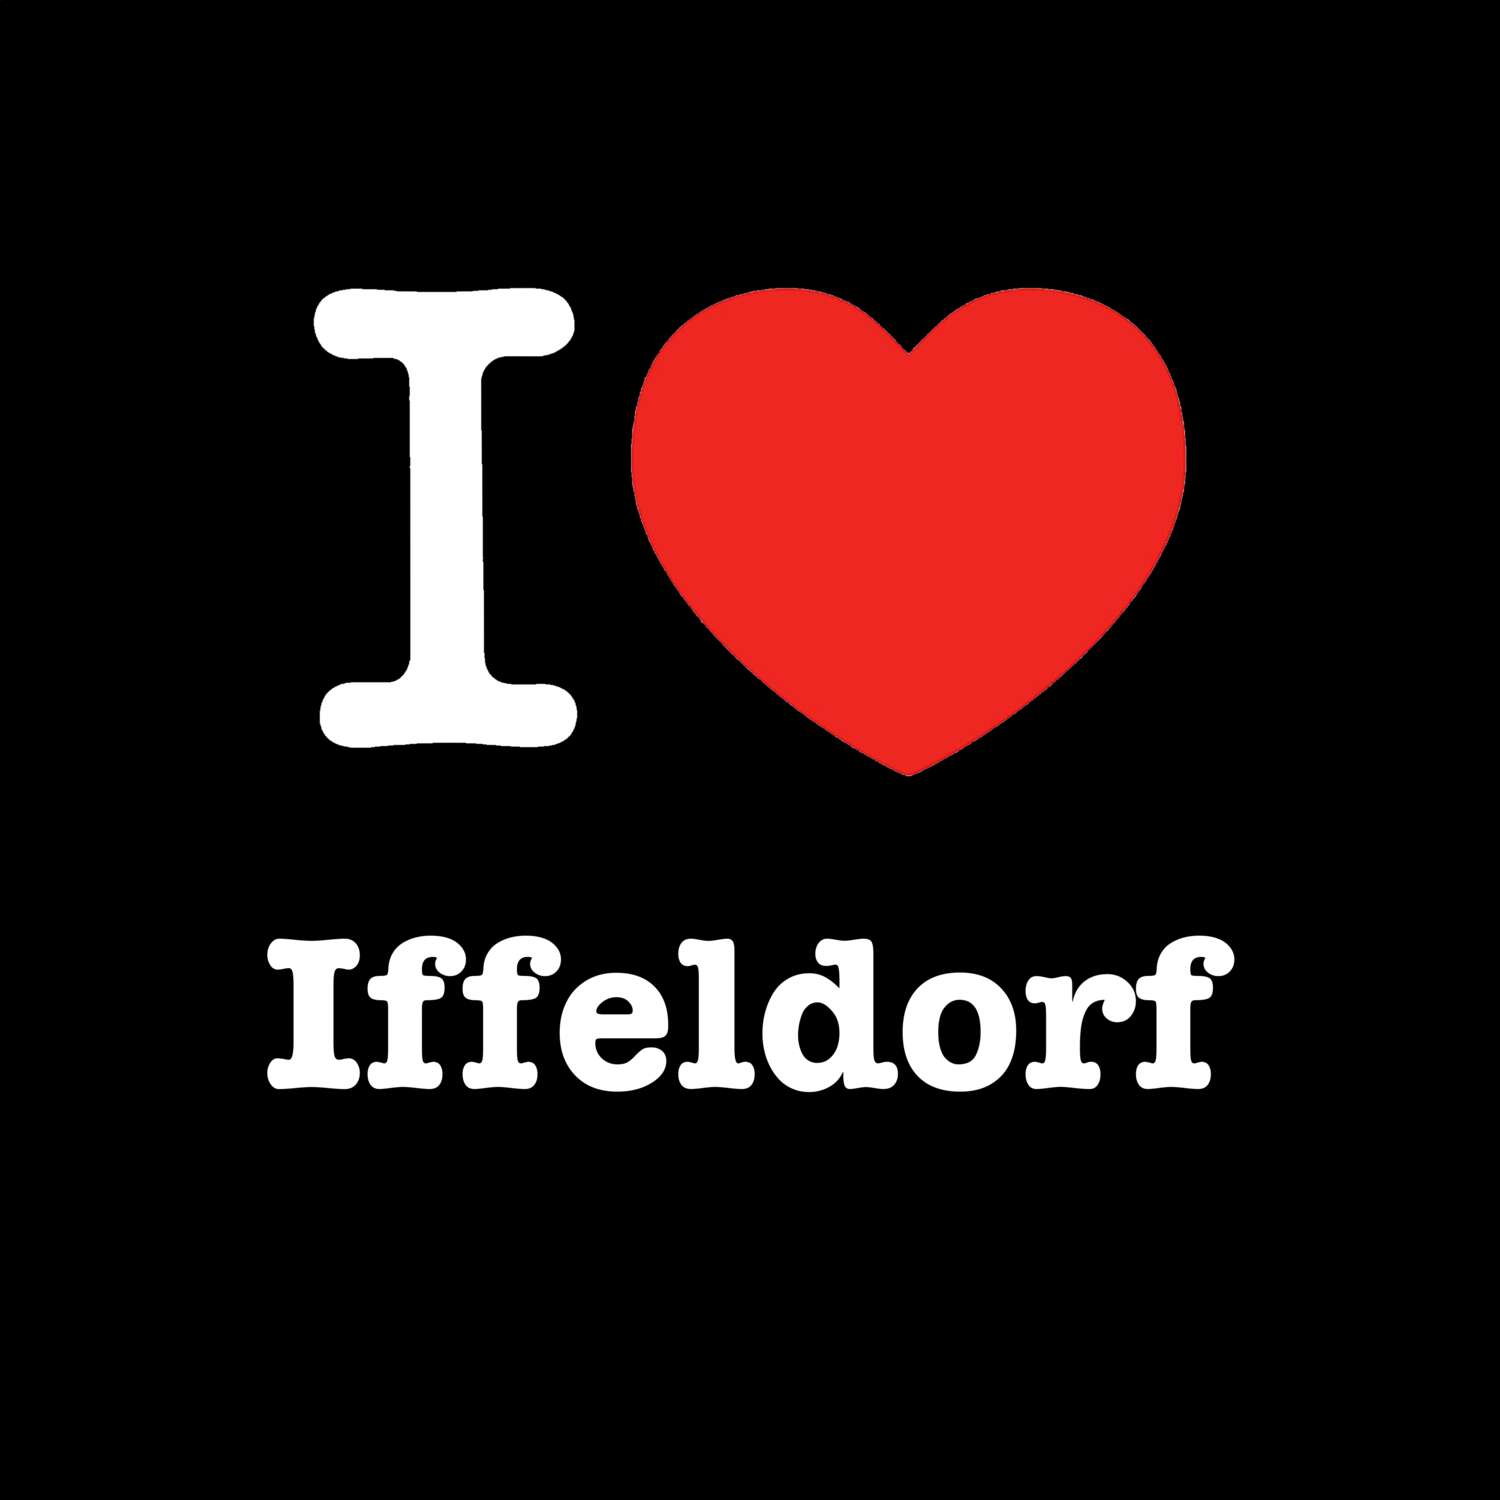 Iffeldorf T-Shirt »I love«